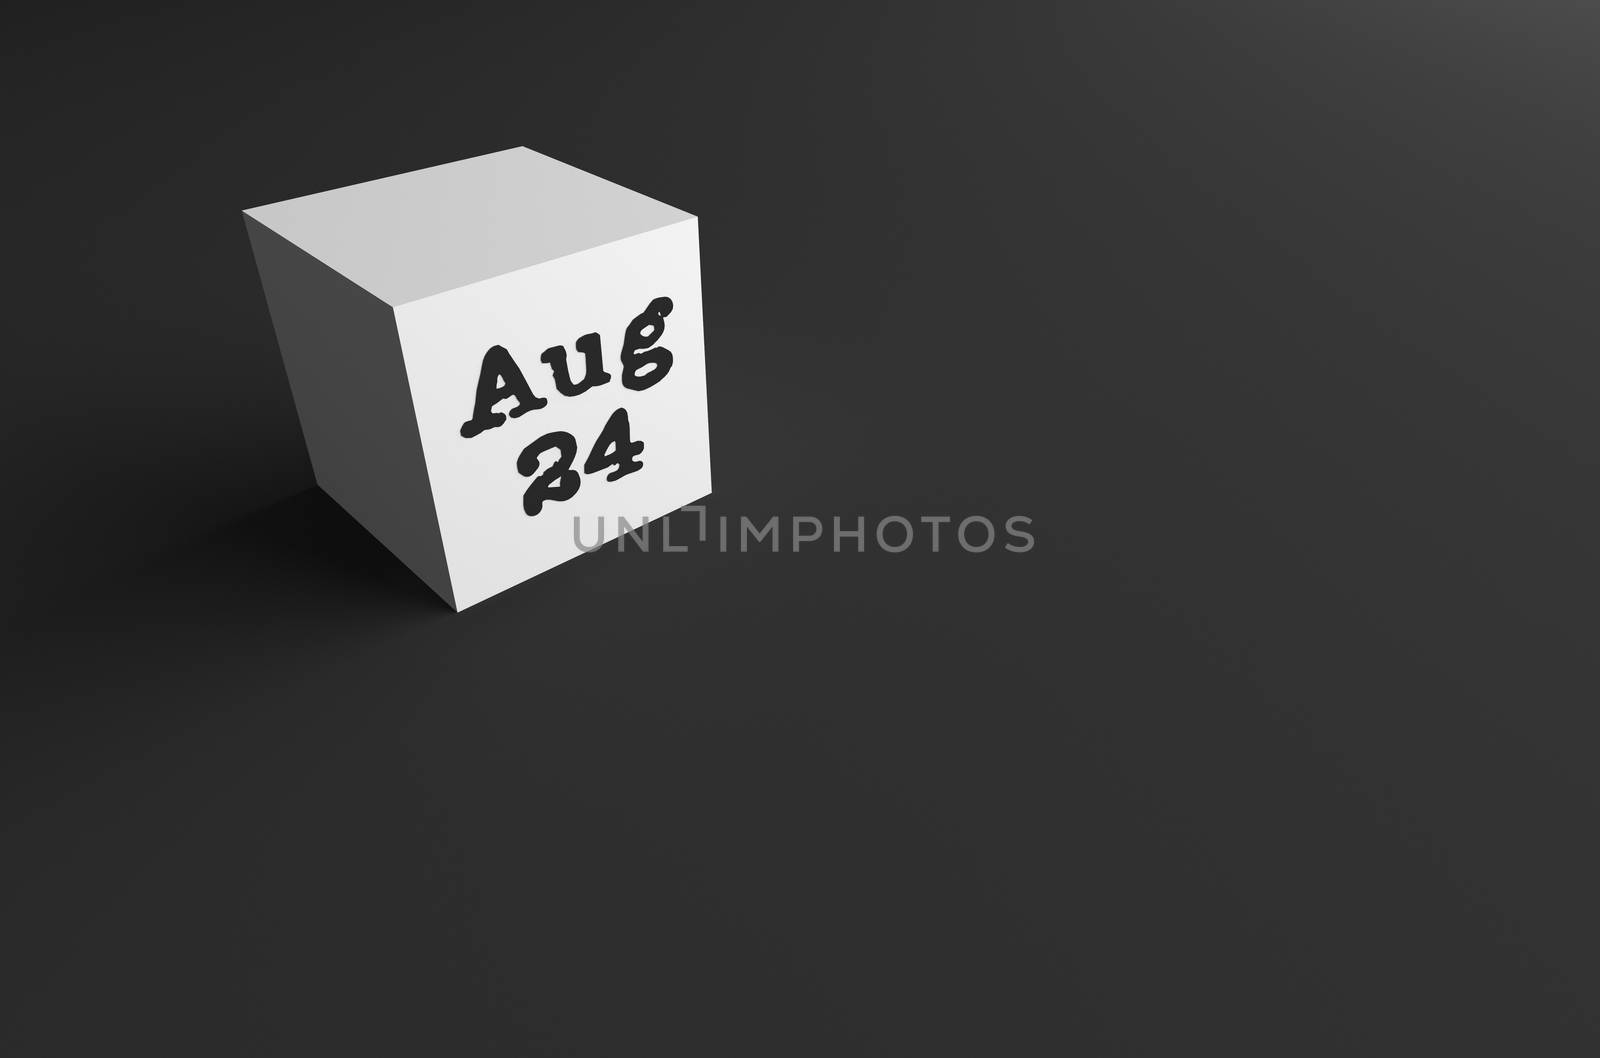 3D RENDERING OF Aug 24 by PrettyTG